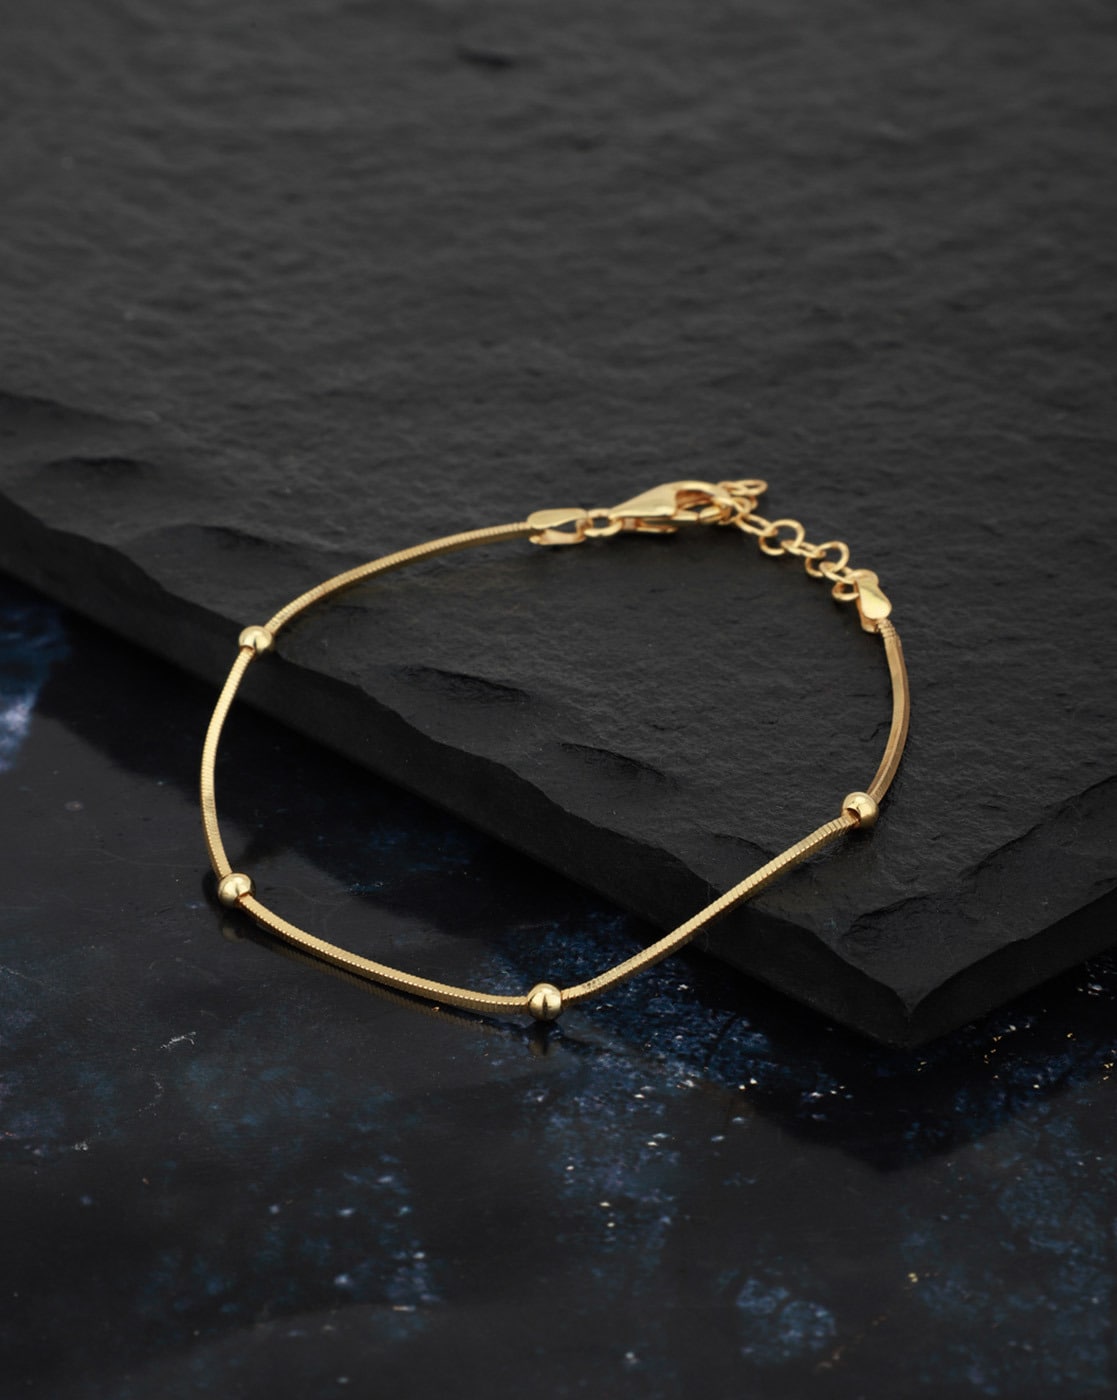 Buy Thin Gold Bracelet 14kt Gold Filled Box Chain Bracelet Online in India   Etsy